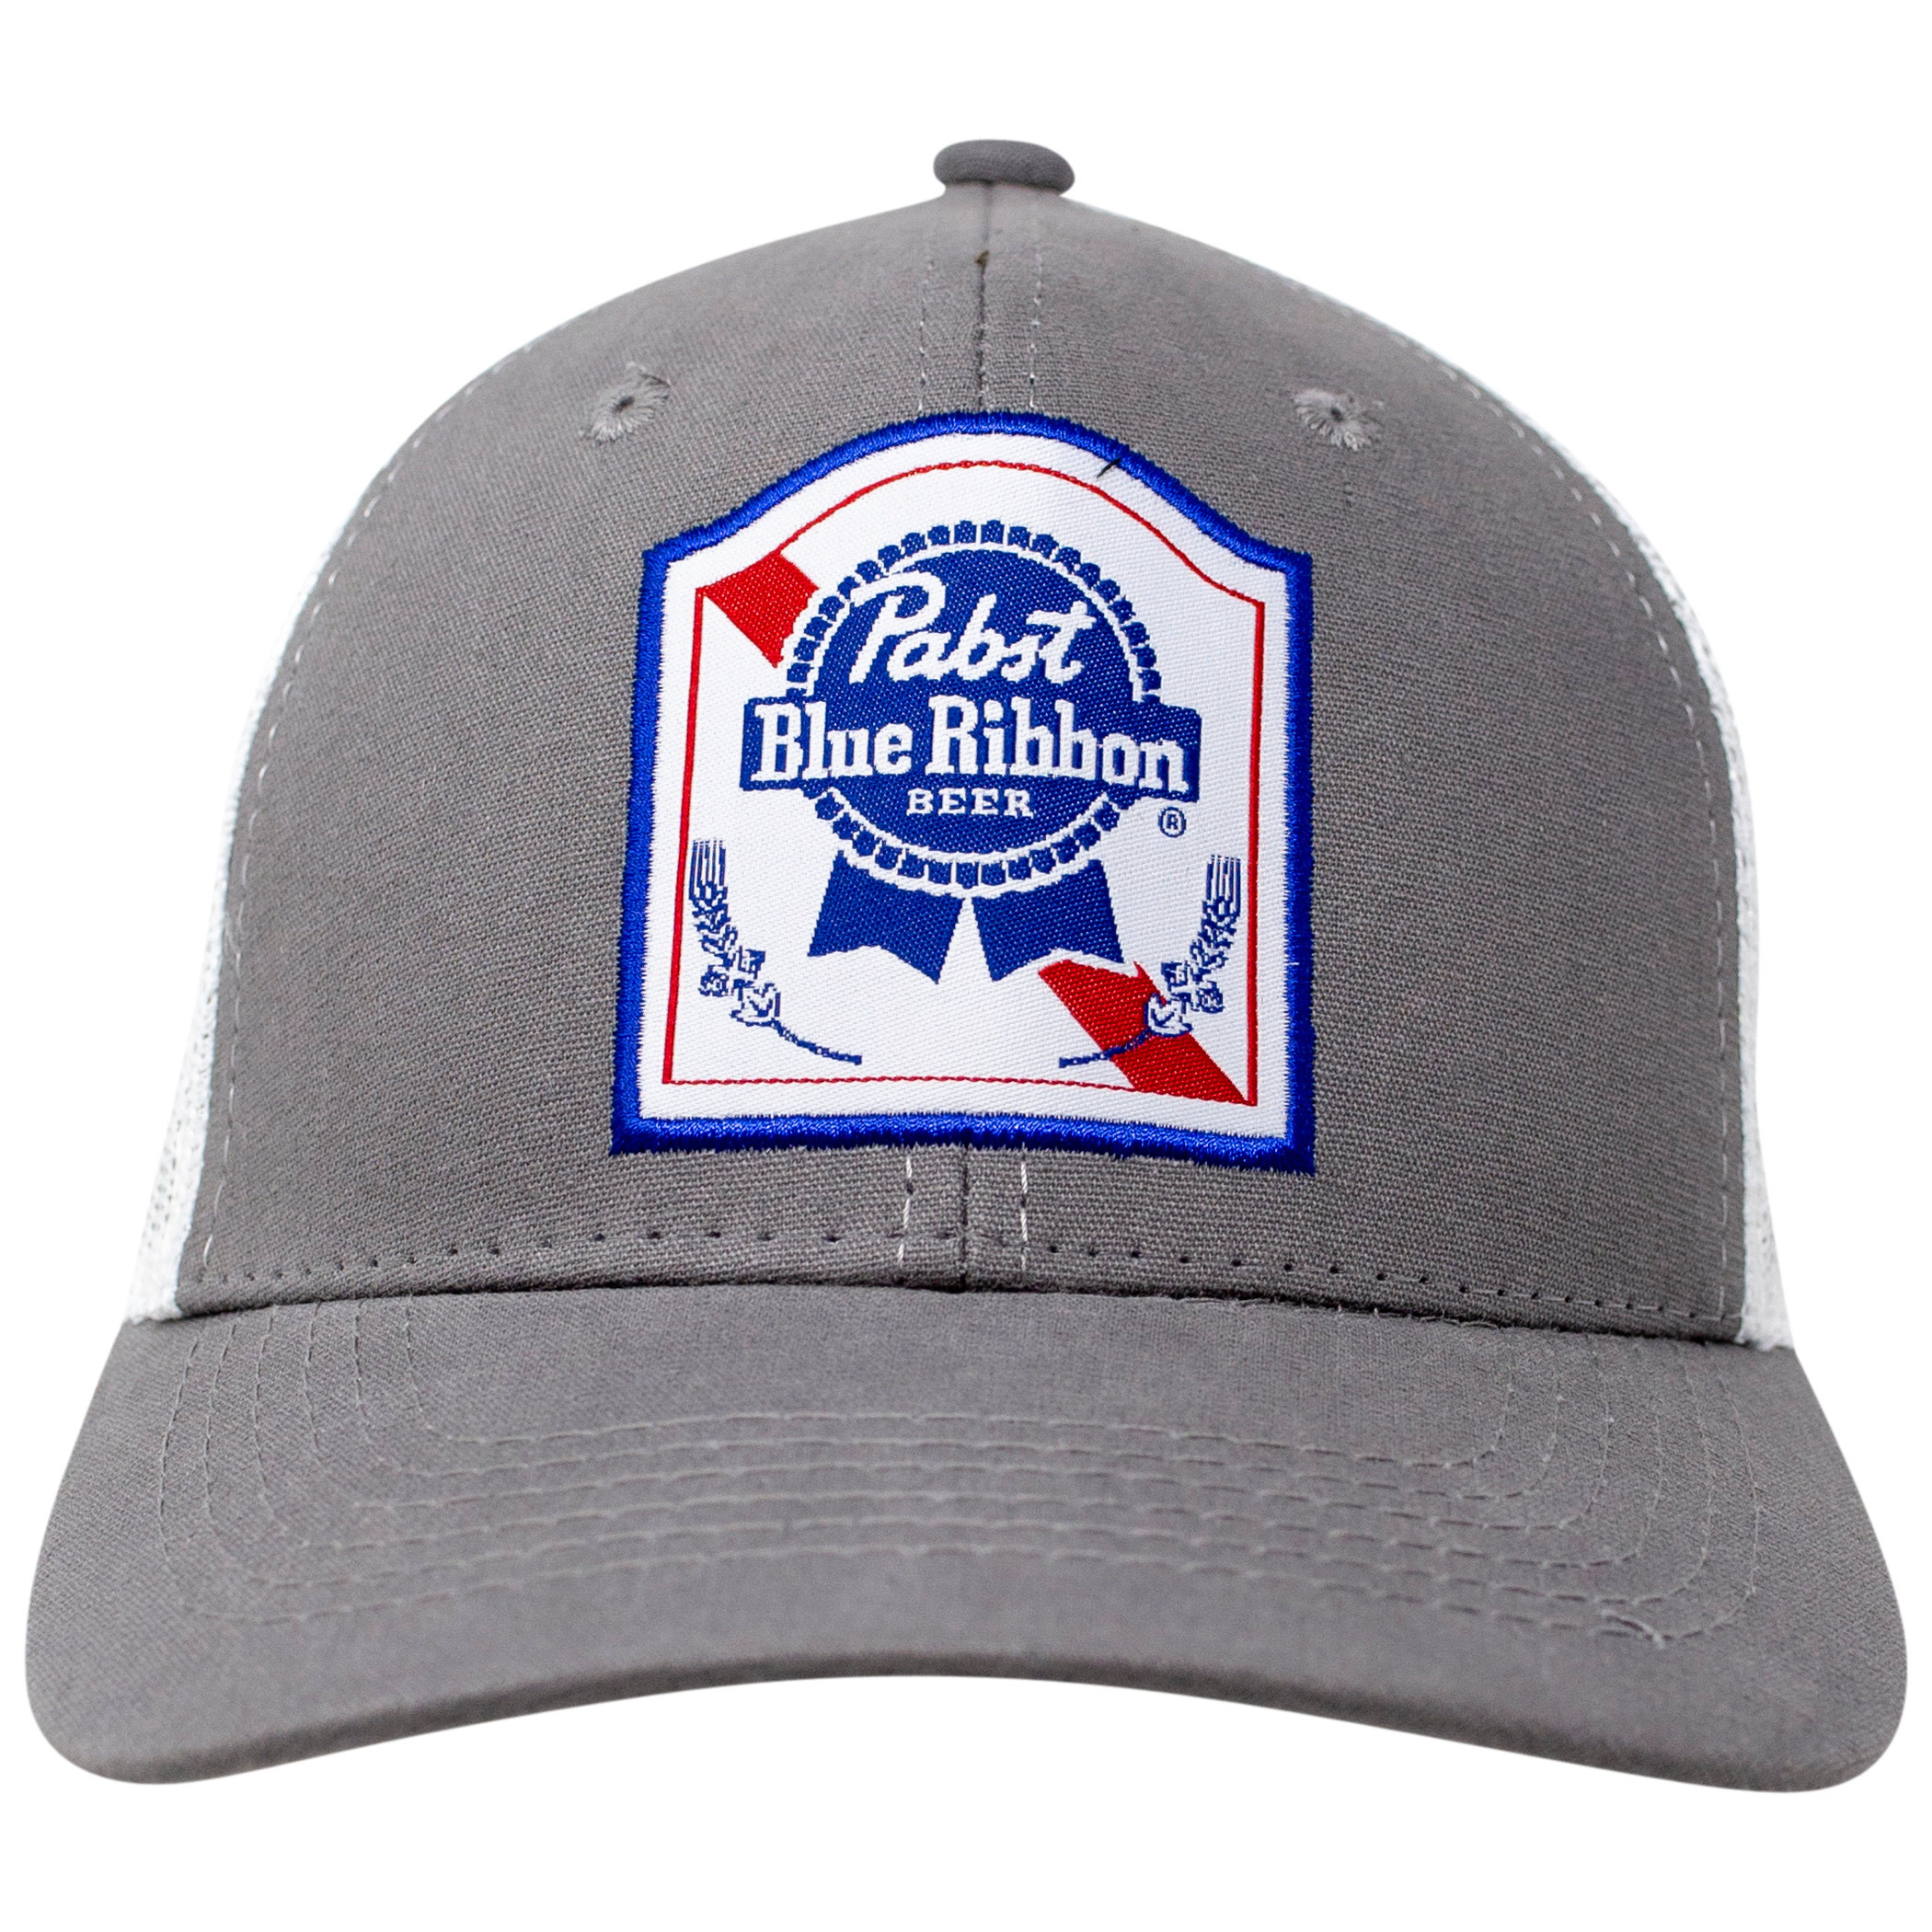 New PBR PABST BLUE RIBBON Beer Ski Hat Stocking Skull Cap Pink NWT